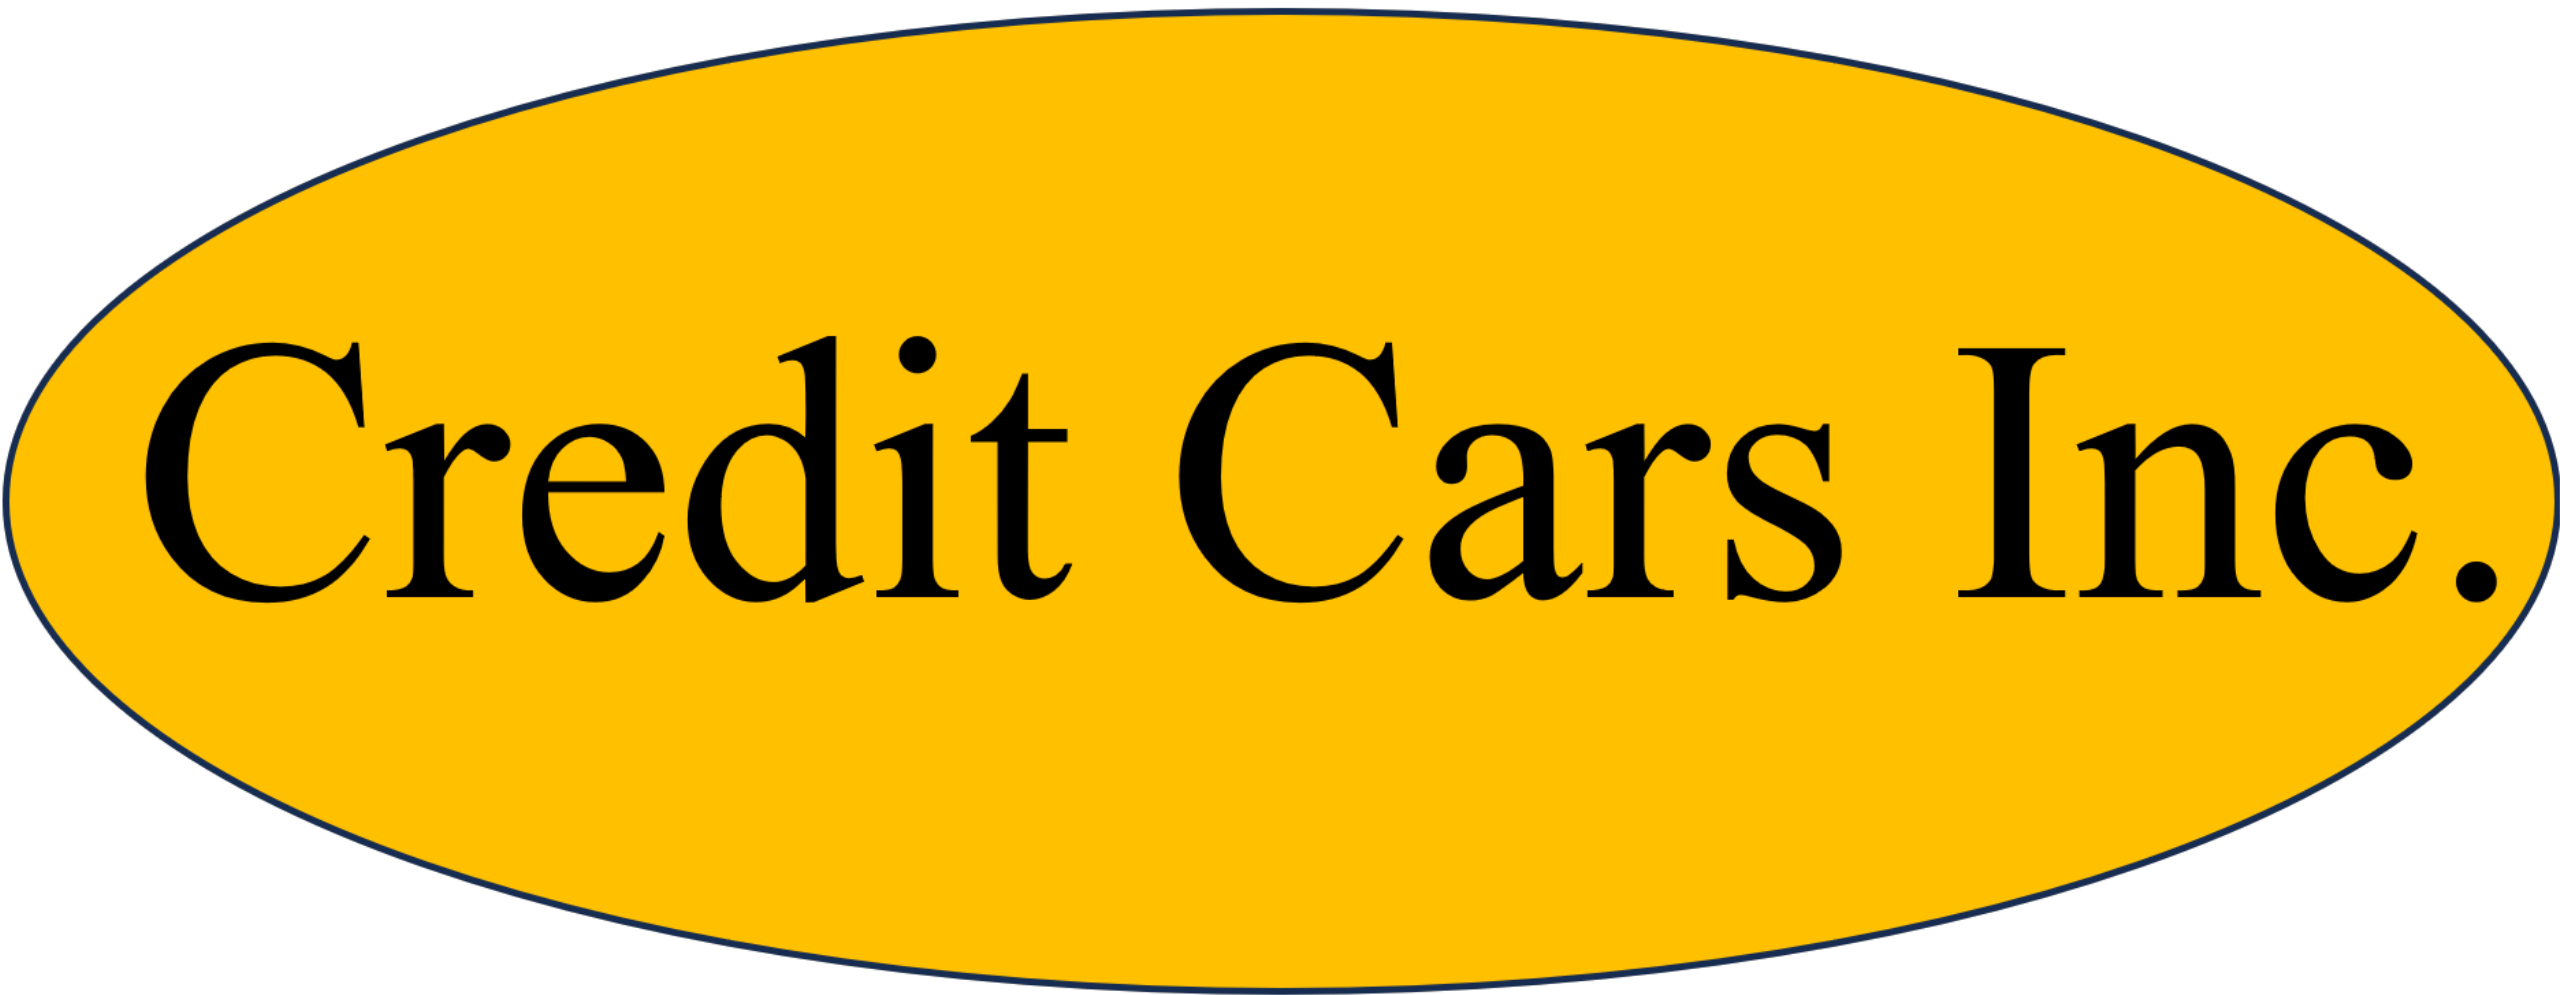 Jeff Elledge Credit Cars Logo